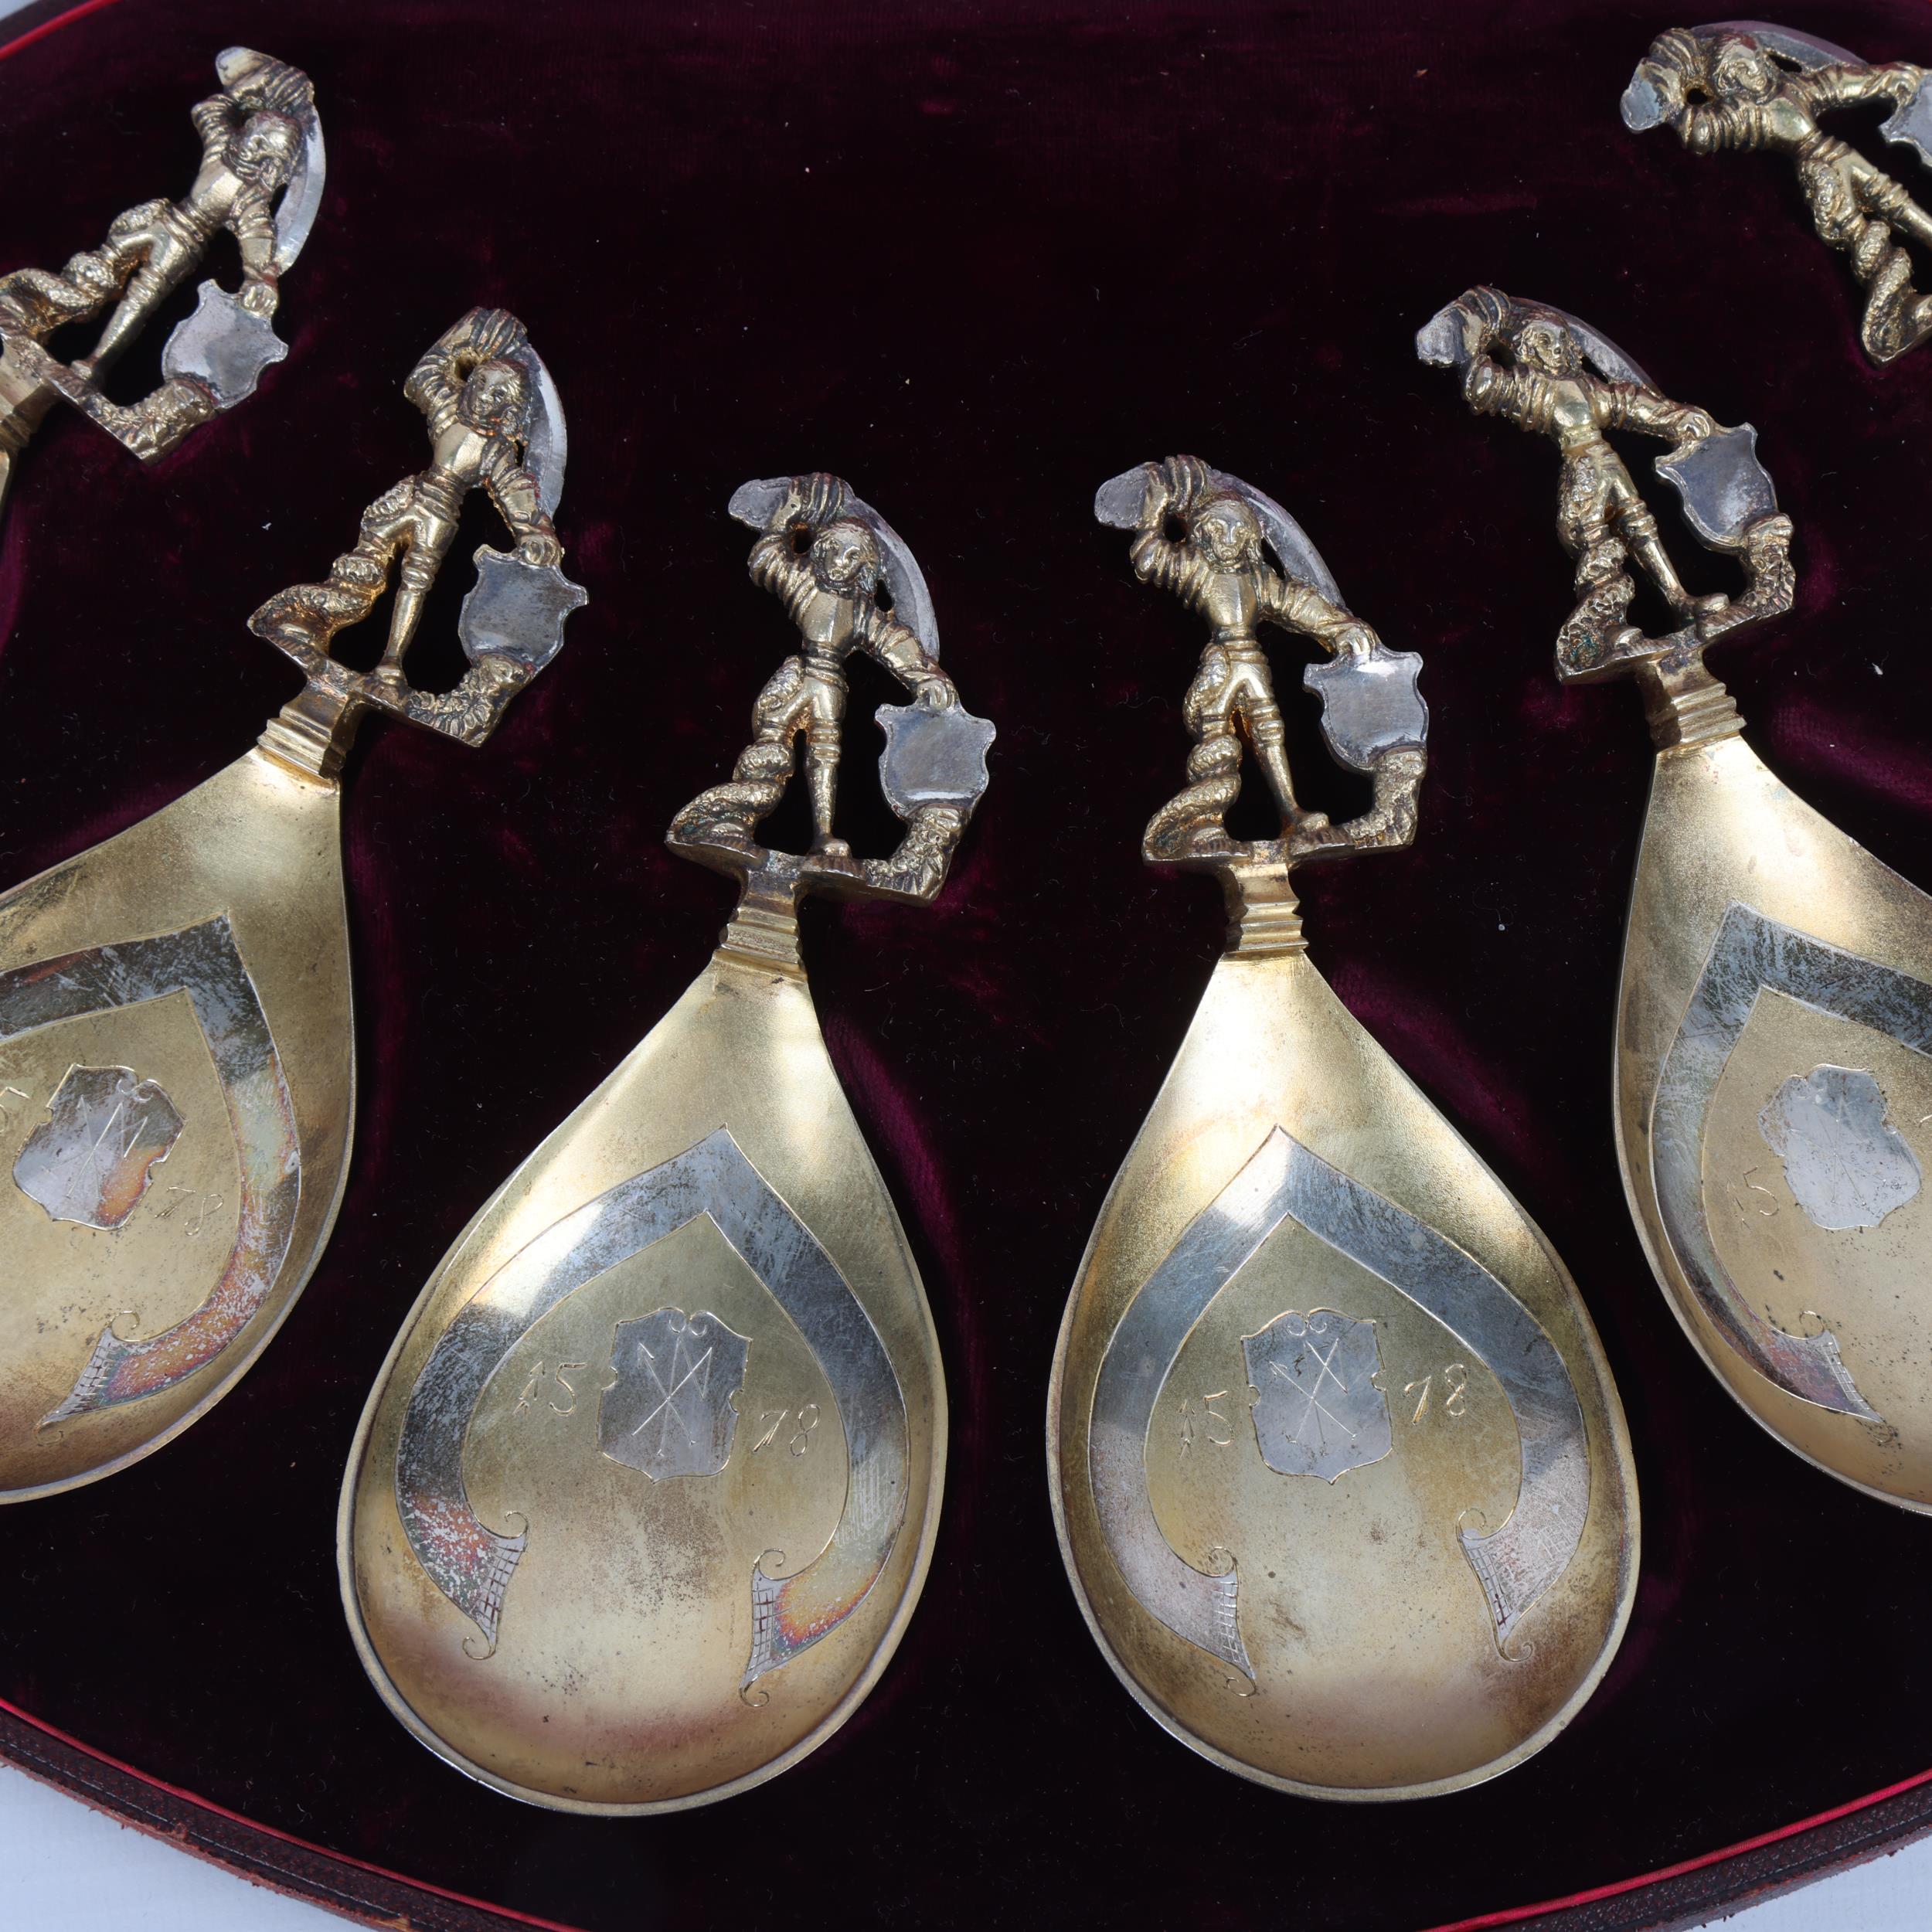 A cased set of 6 parcel-gilt silver 16th century style Scandinavian spoons, CJ Vander, London - Image 2 of 3